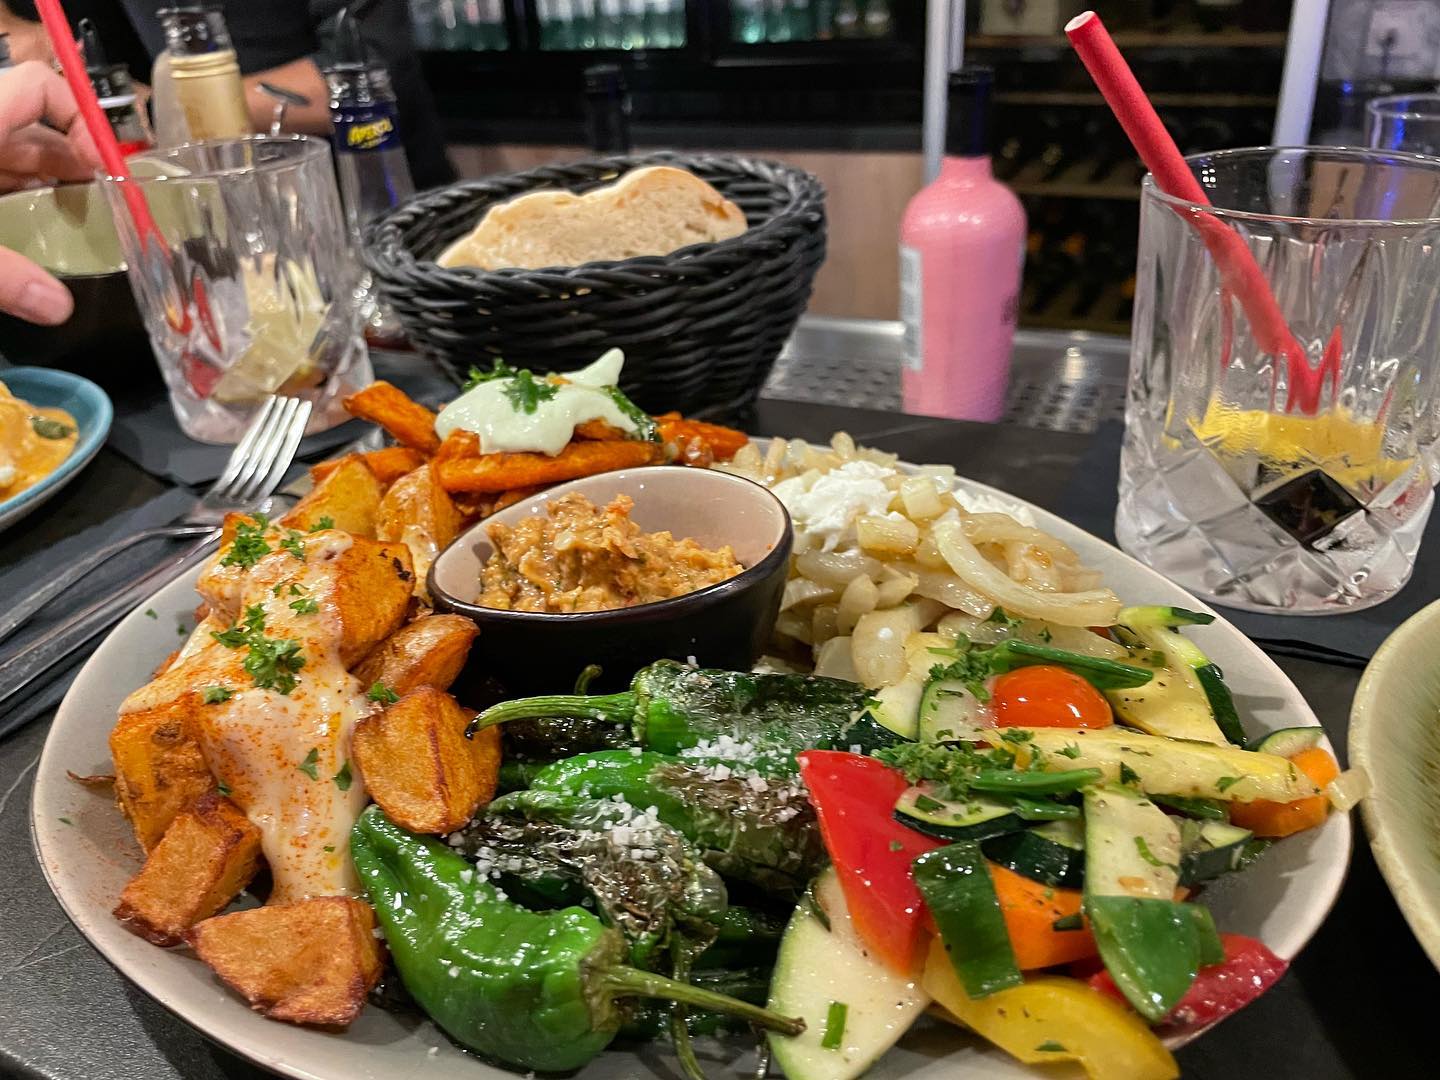 Lecker Essen in der Tapas Bar mit @dancorni #food #foodporn #tapas - via Instagram